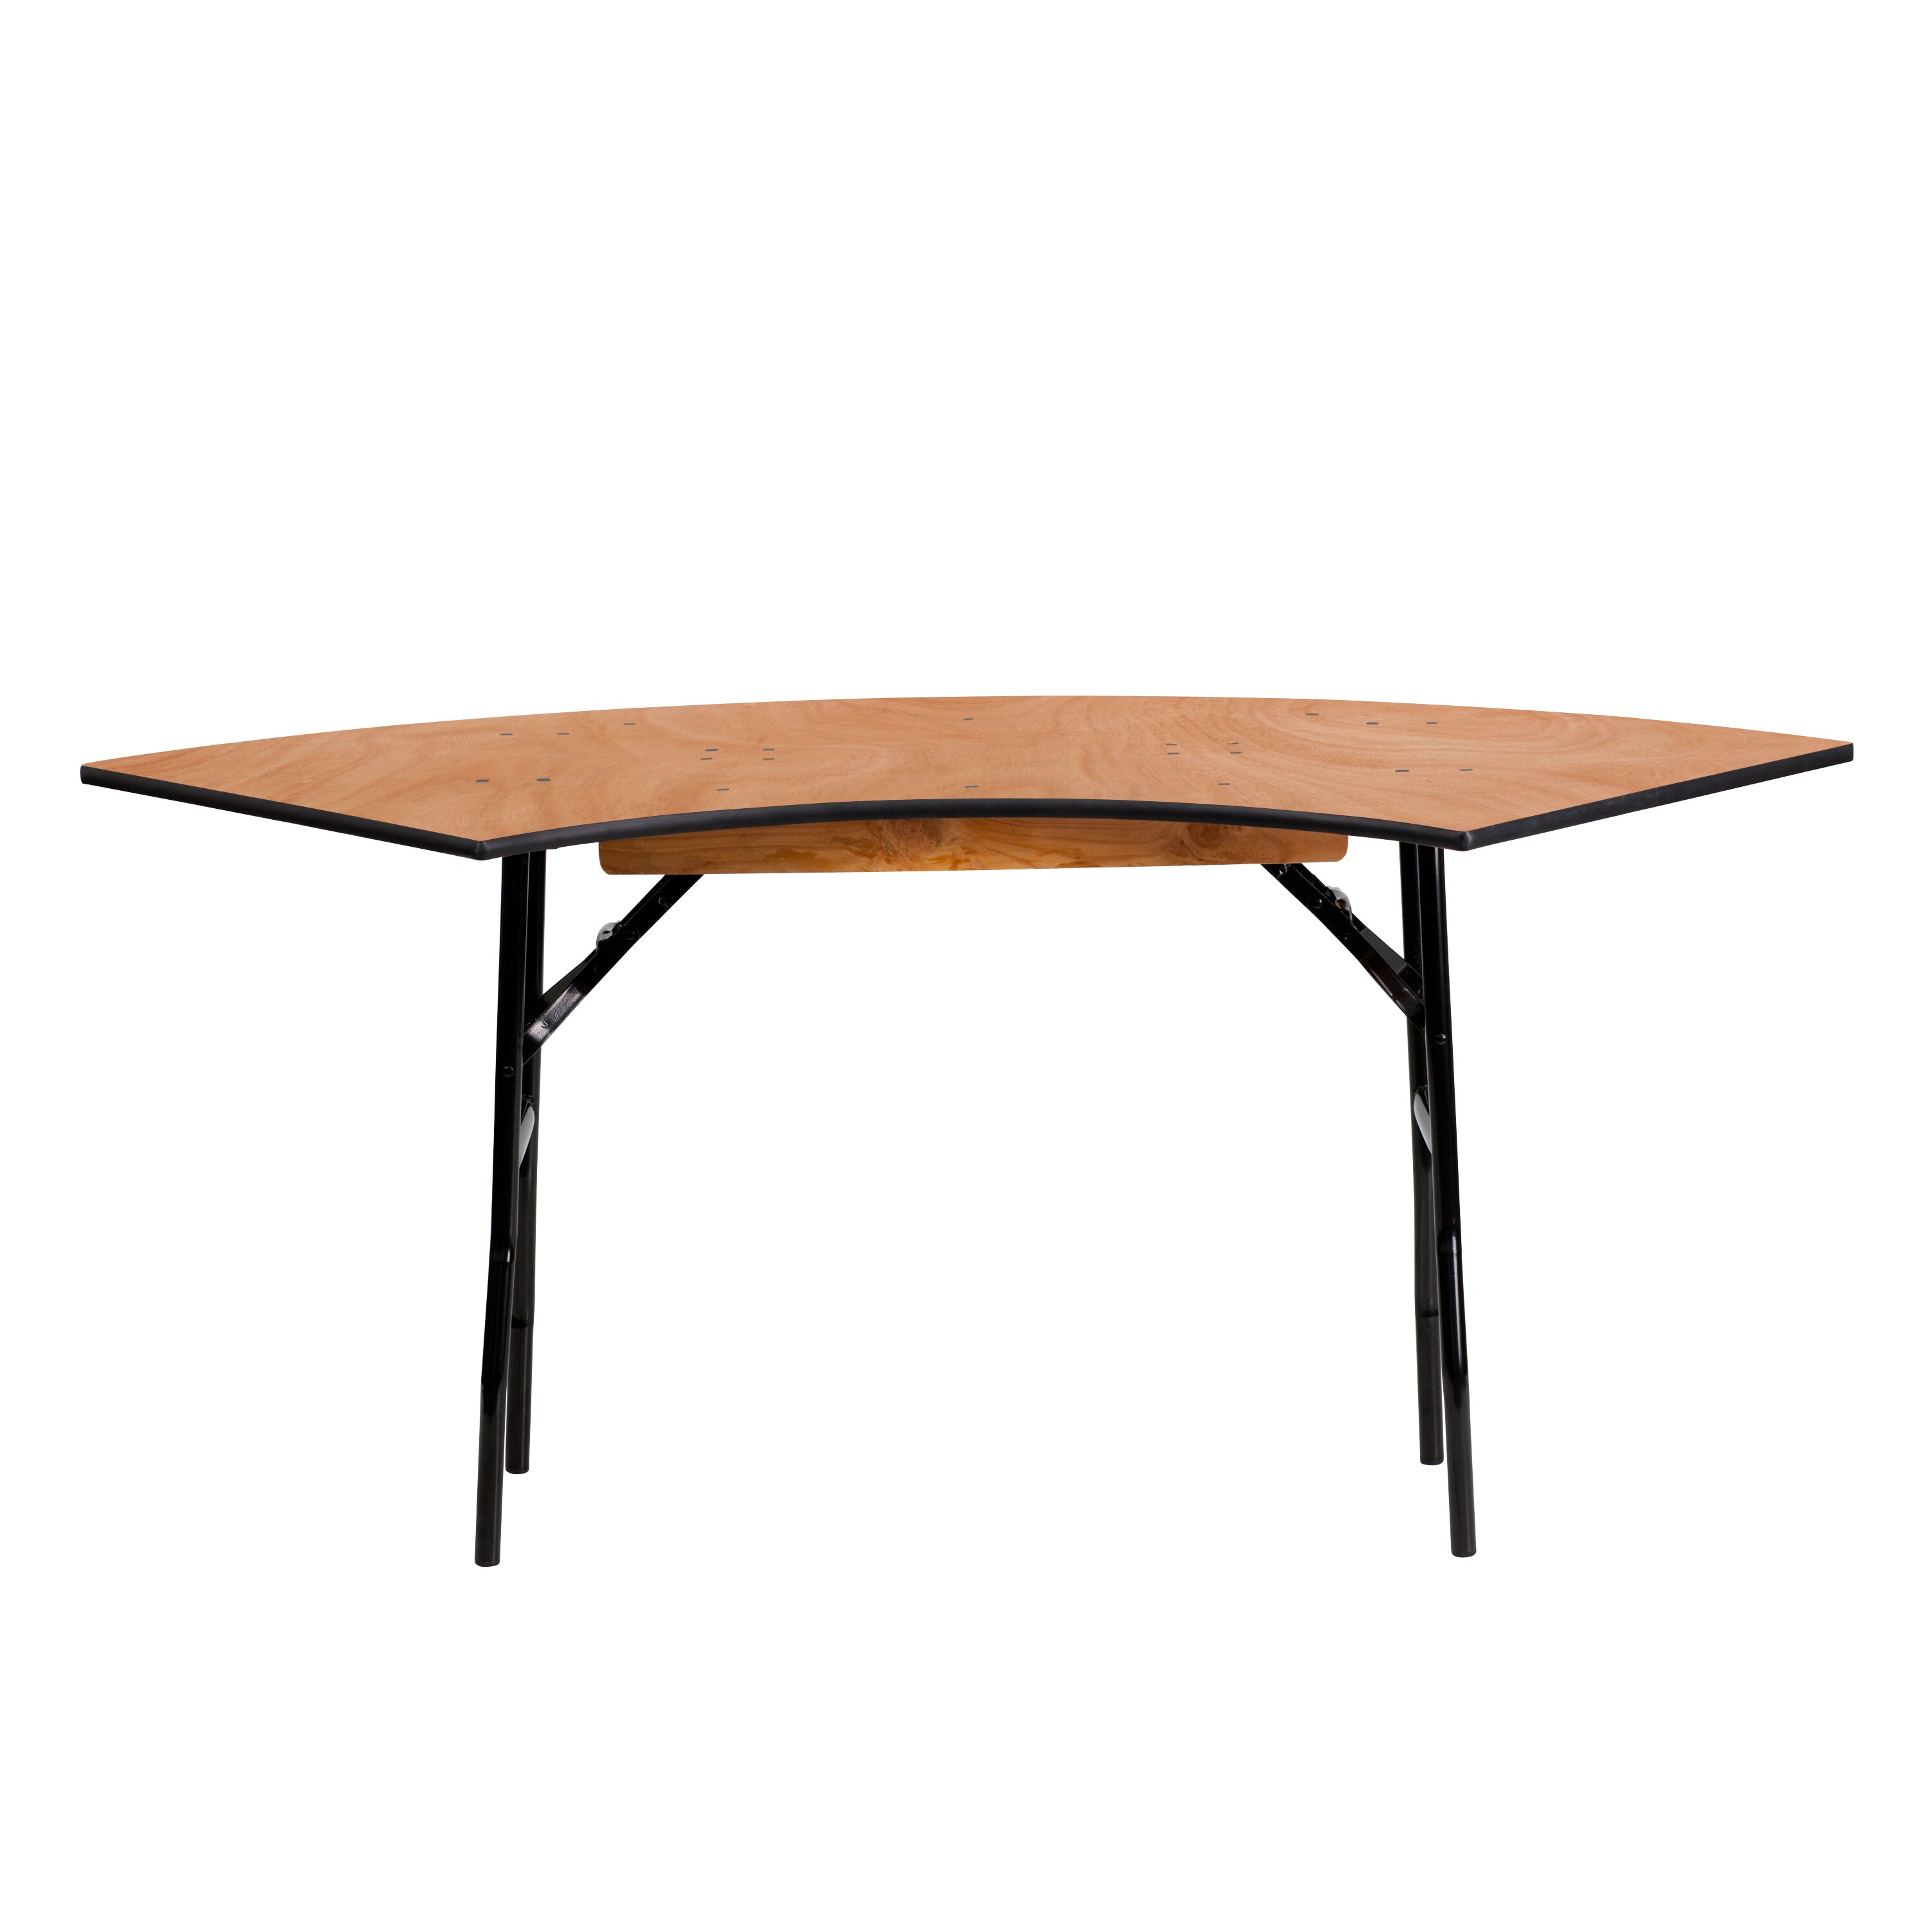 Flash Furniture 48 Half-Round Wood Folding Banquet Table